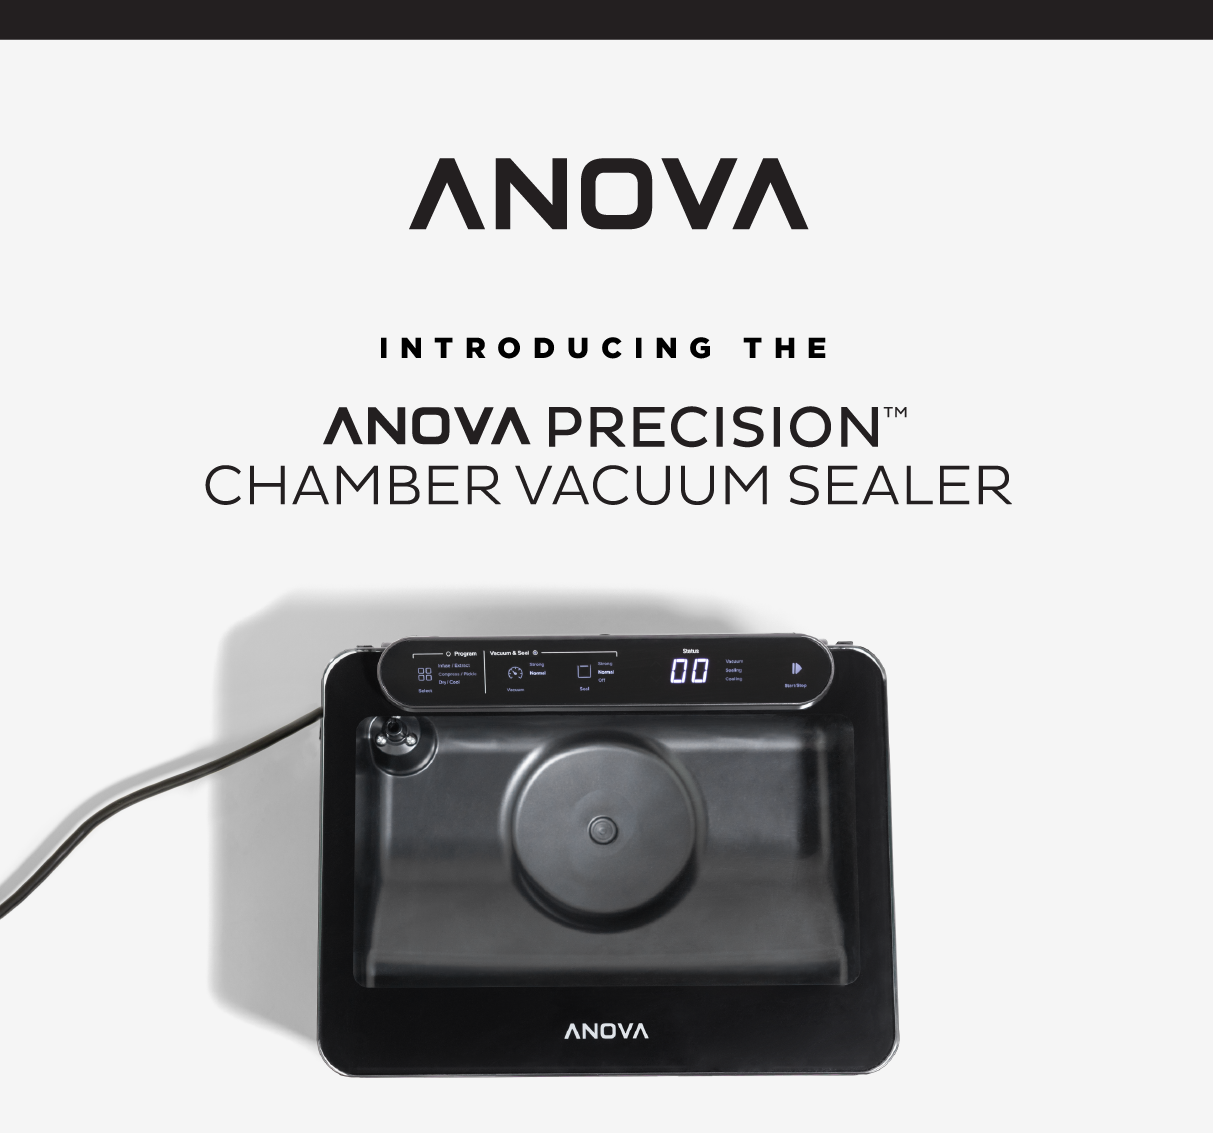 Anova: Meet the Anova Precision Chamber Vacuum Sealer